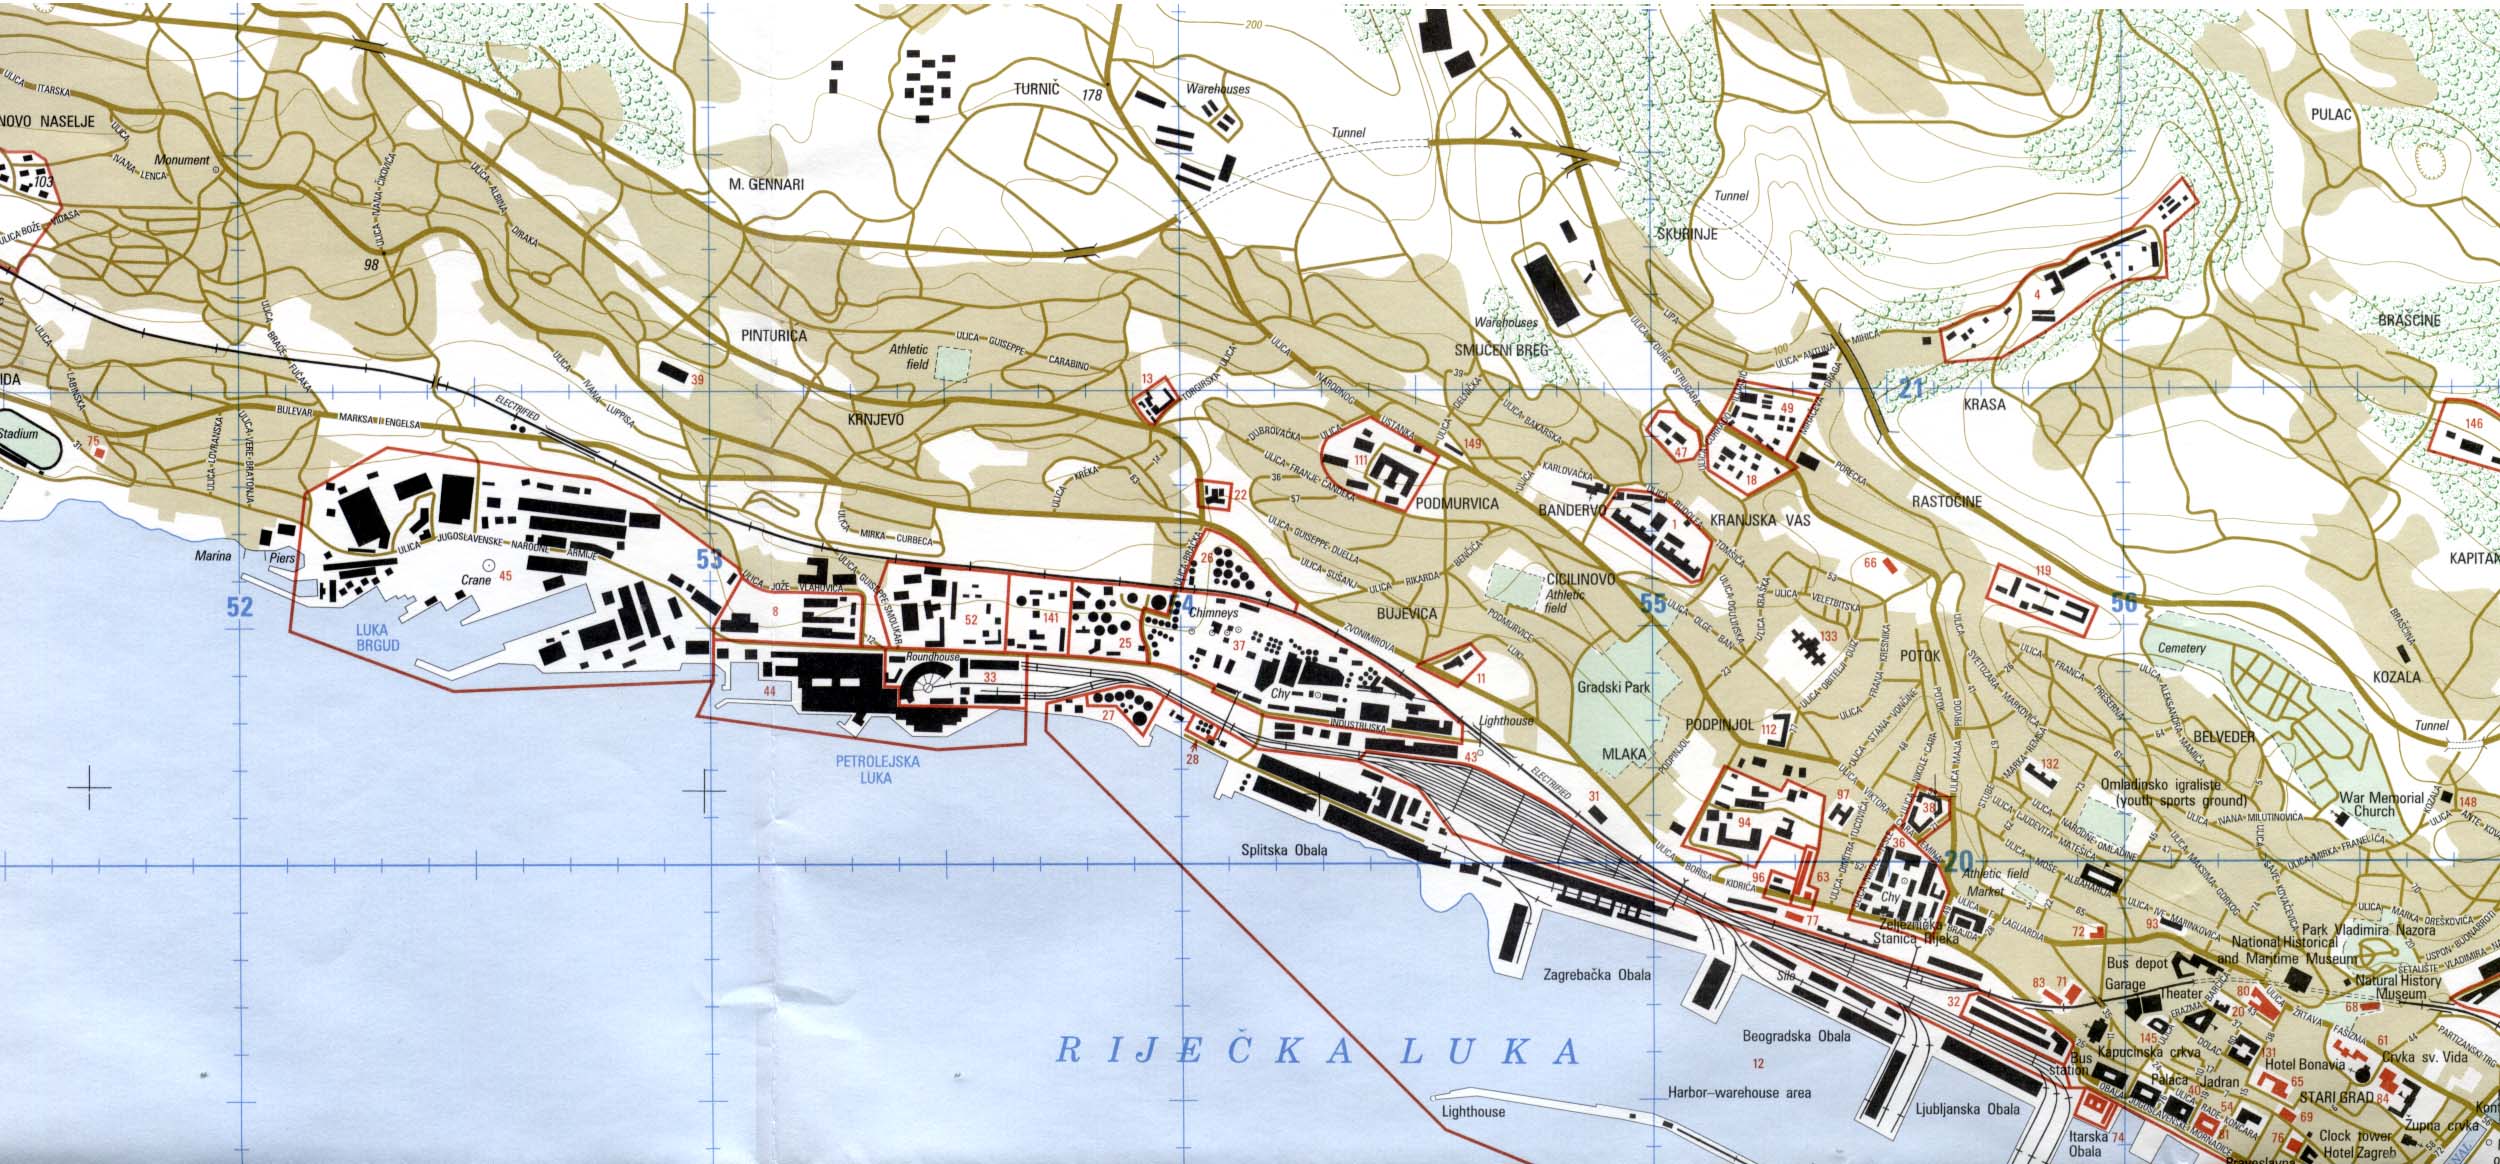 rijeka karta Free Croatia Maps rijeka karta